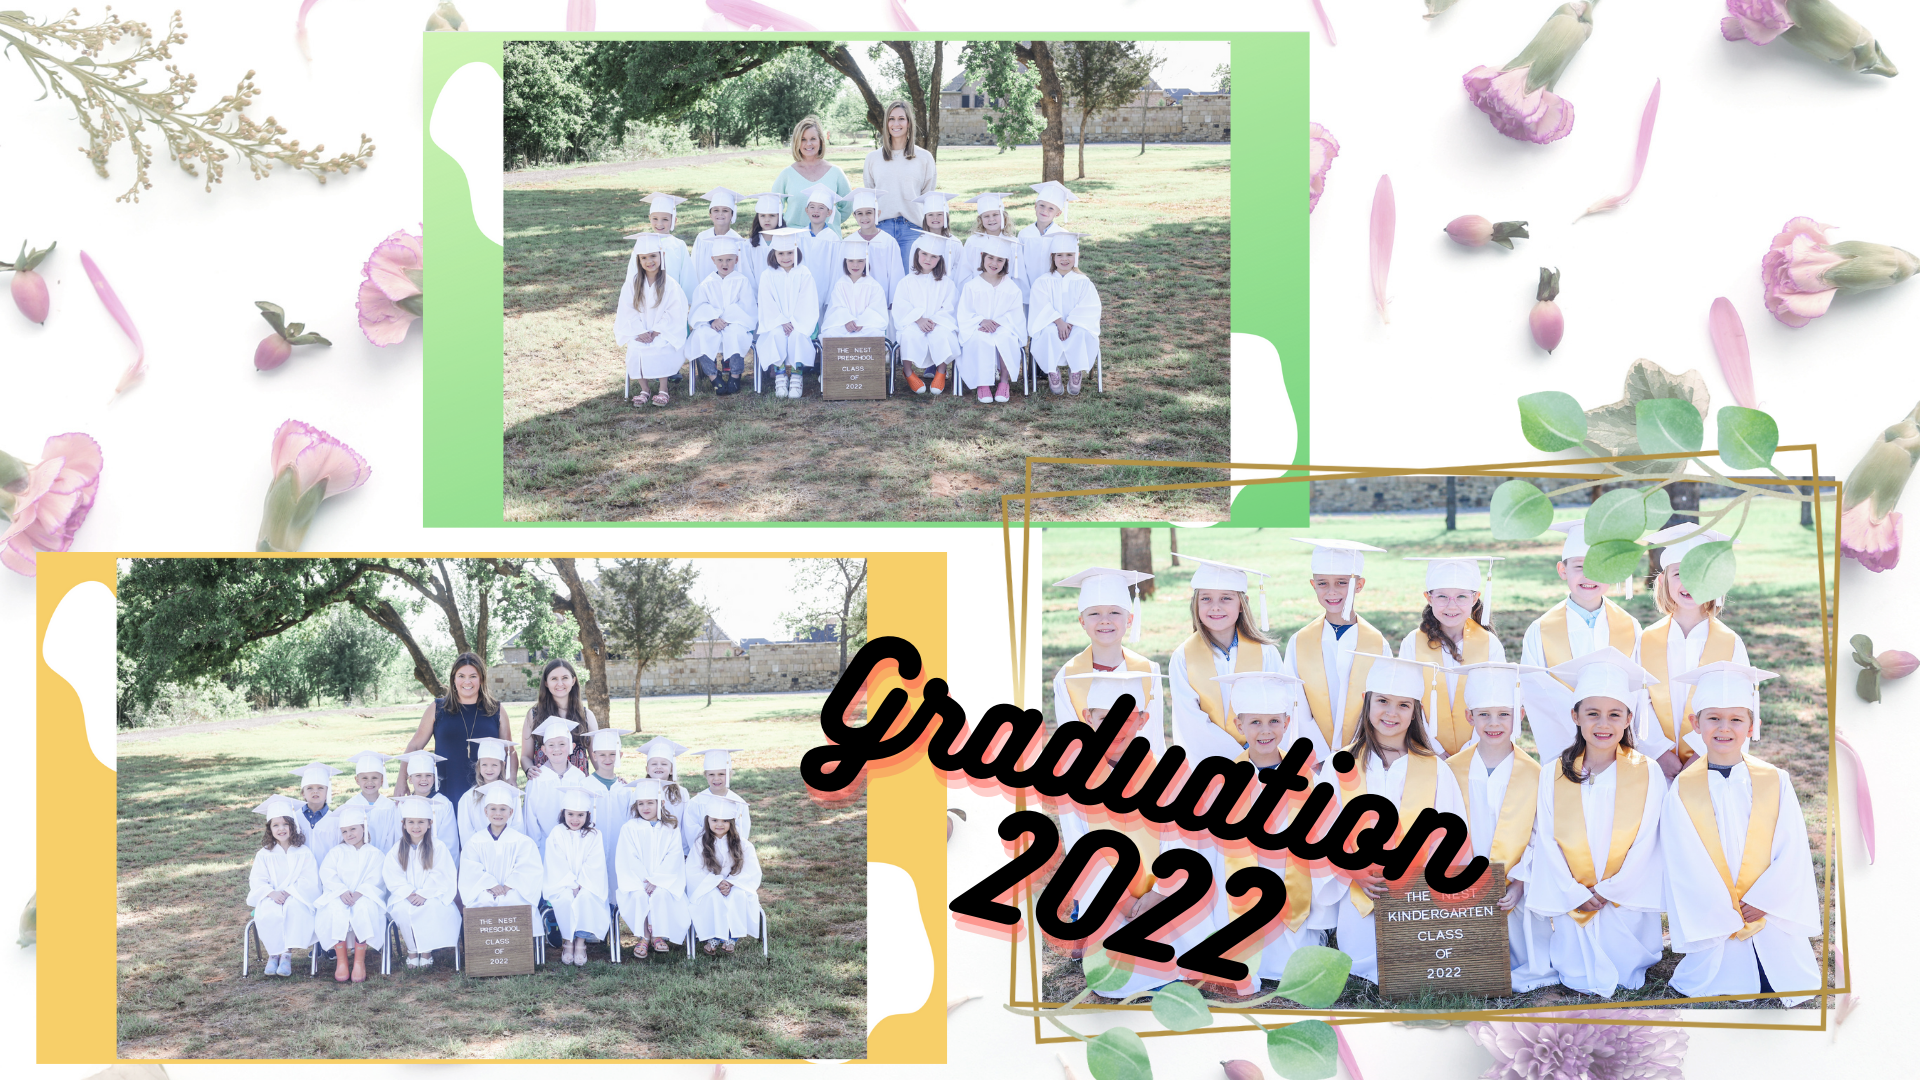 Nest Graduation 2022